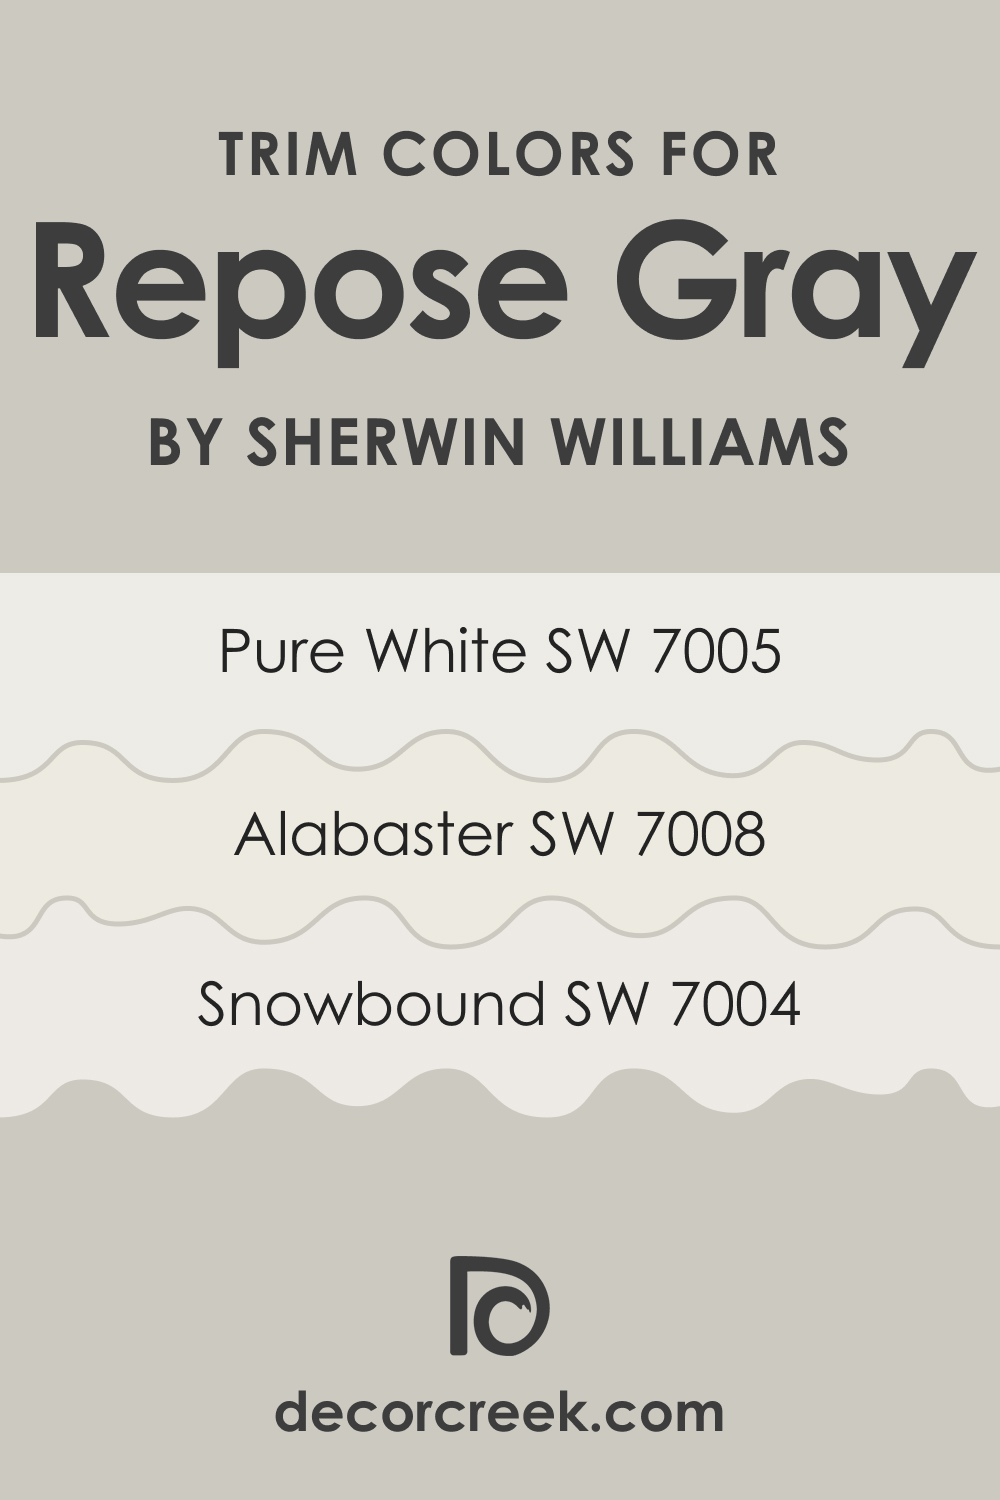 Trim Colors of SW 7015 Repose Gray